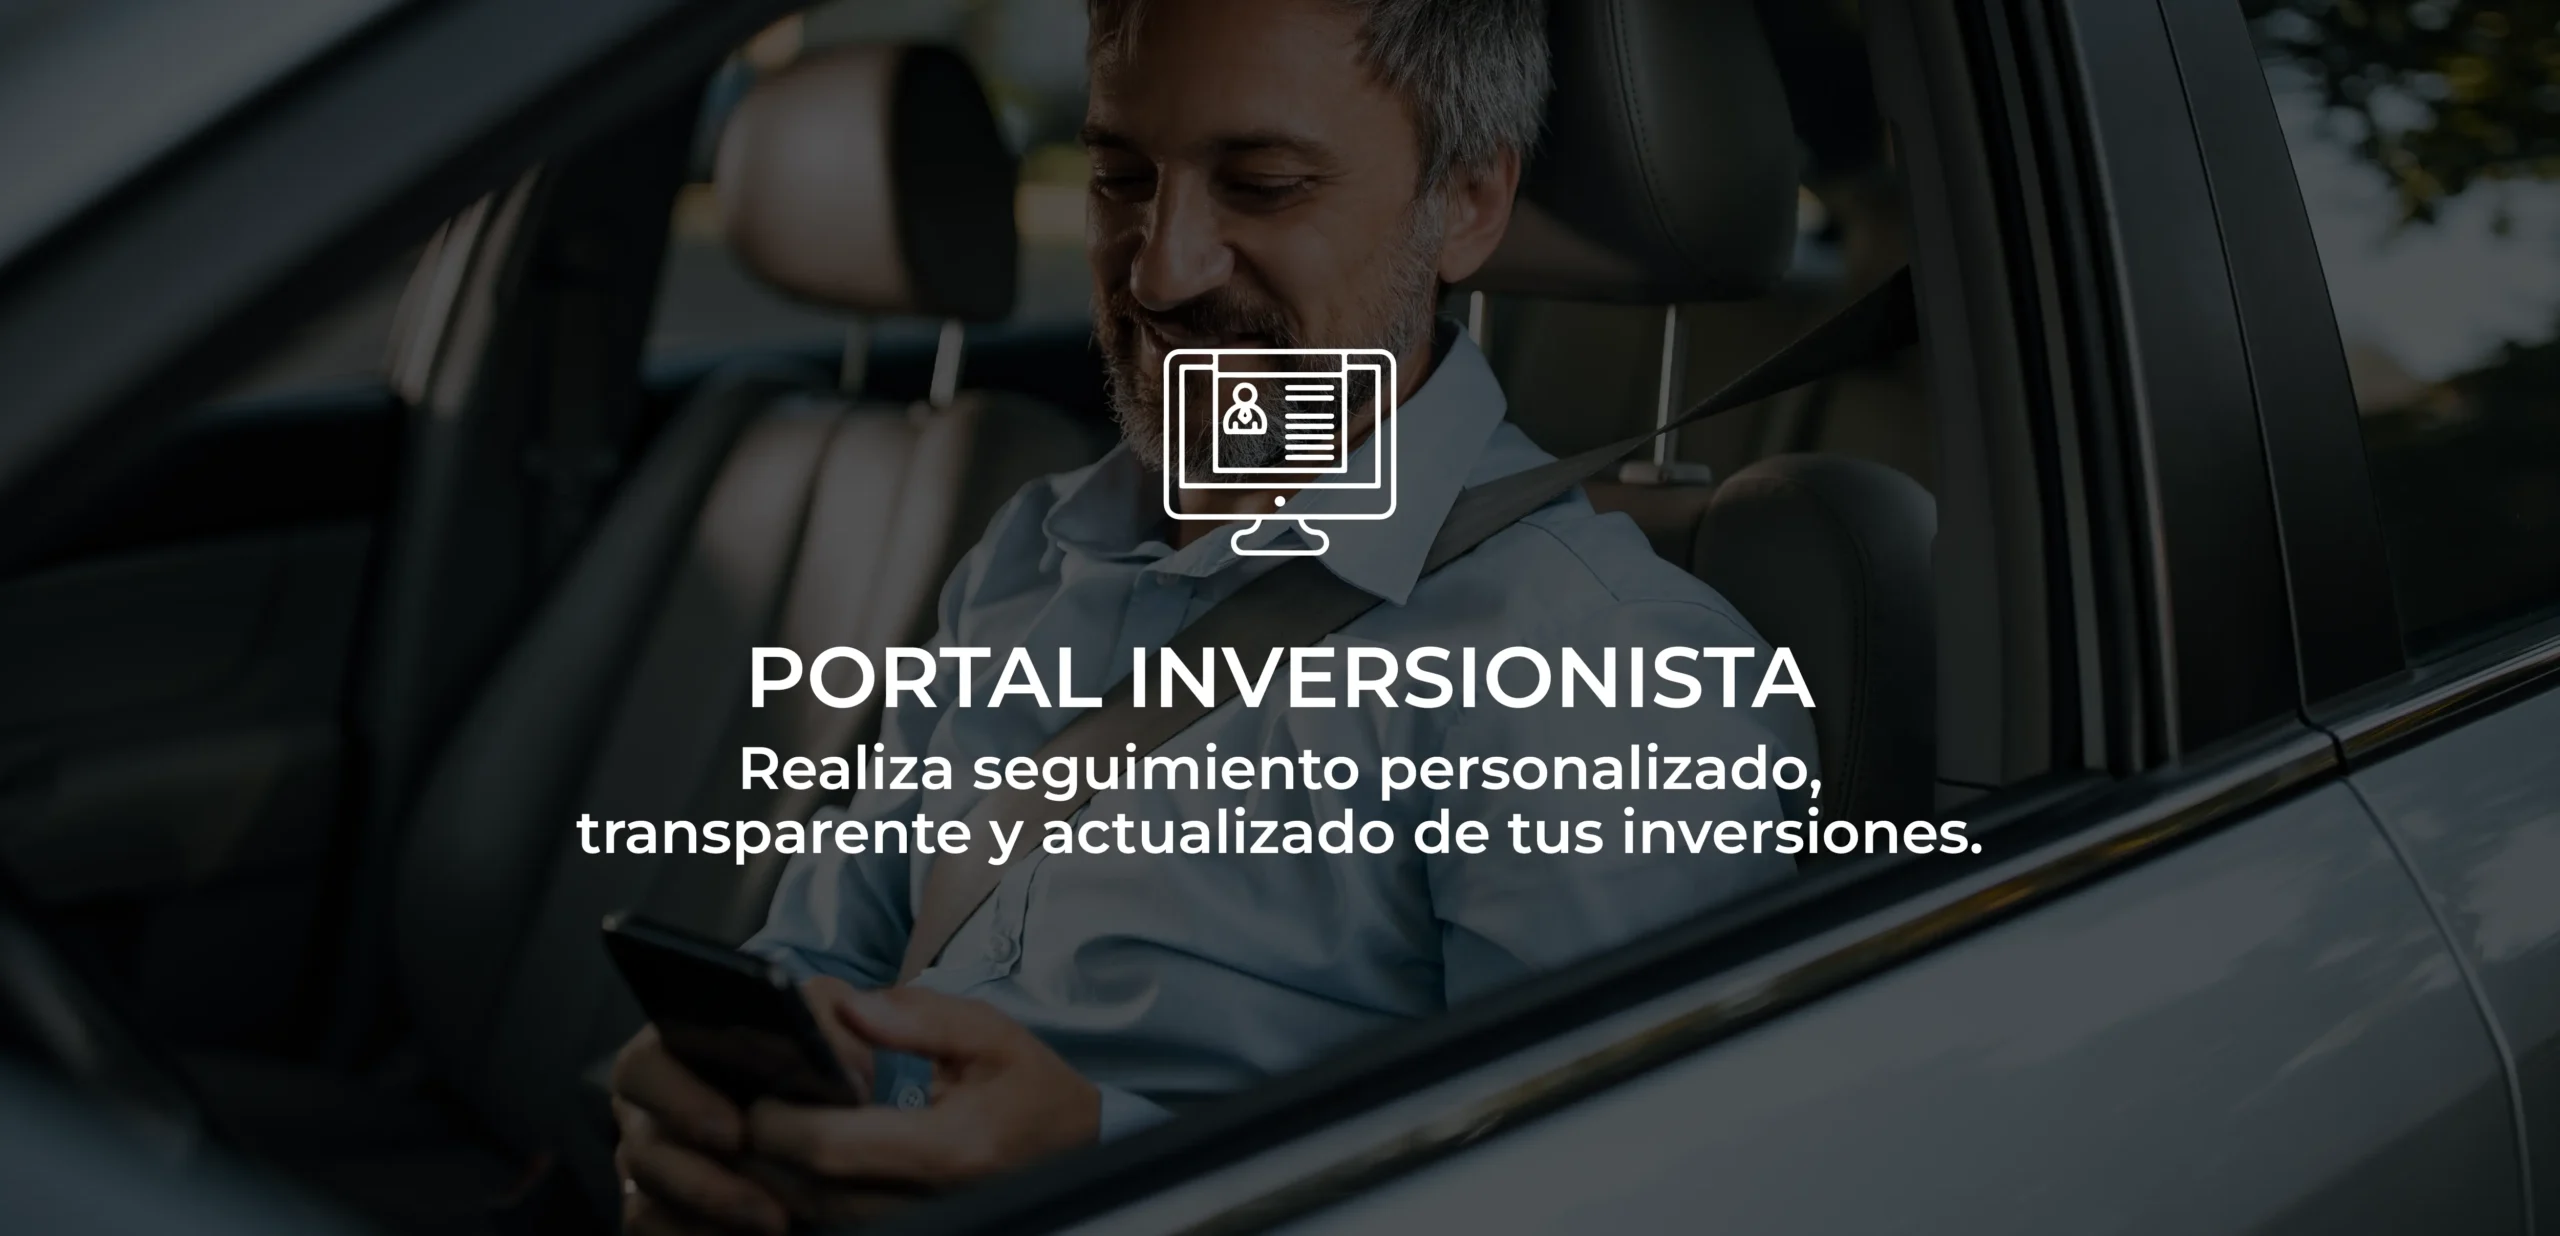 SOCIO INVERSIONISTA_PORTAL